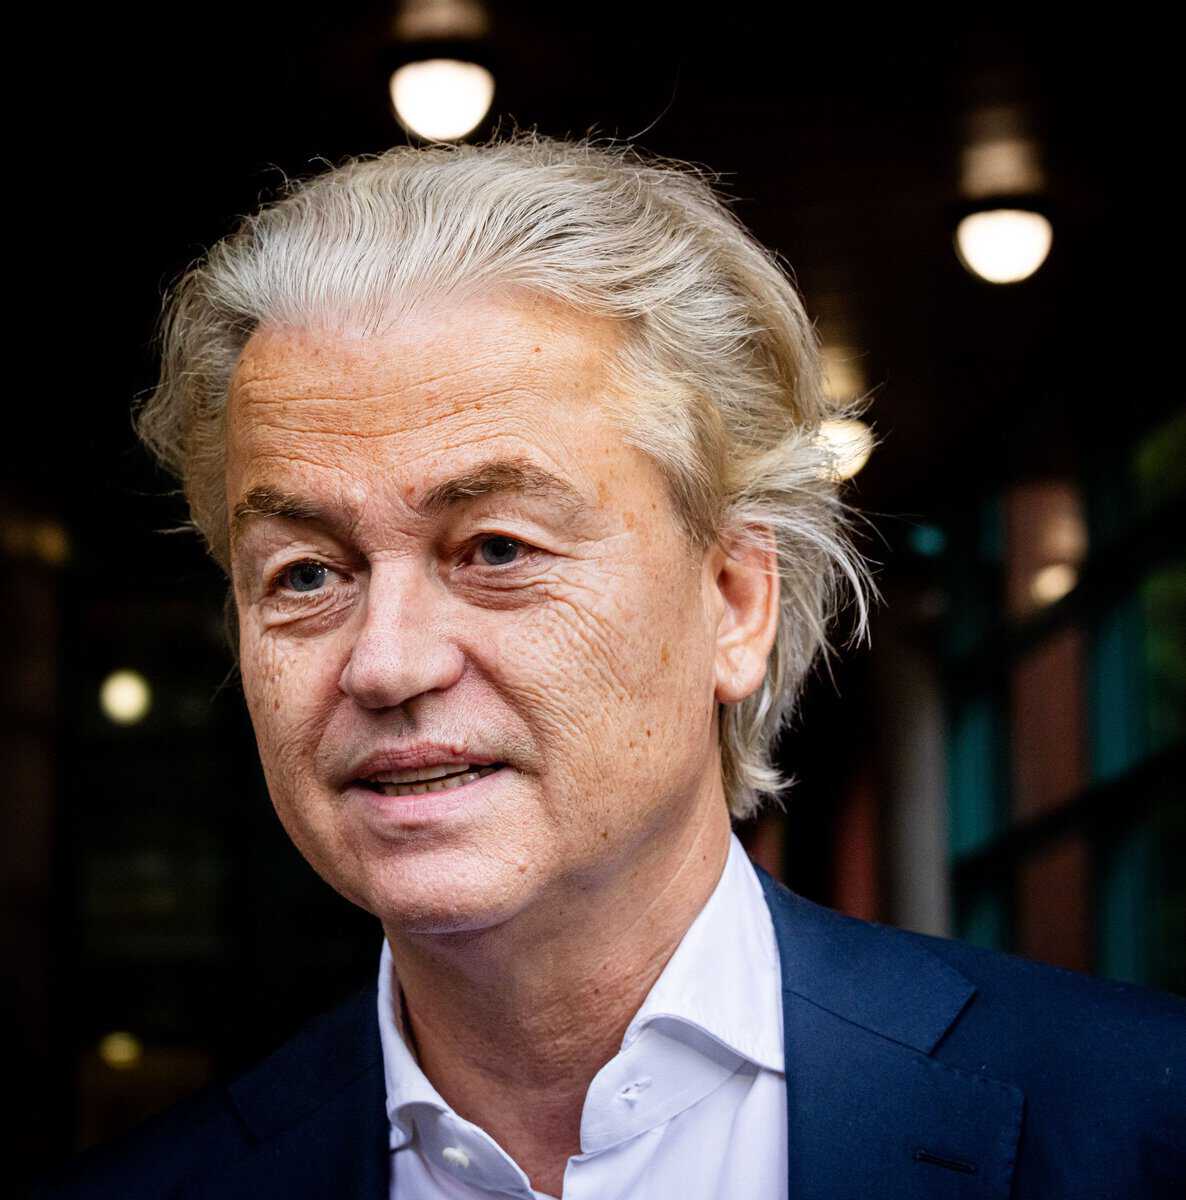 Dutch politician Geert Wilders withdraws proposal to ban mosques, Quran